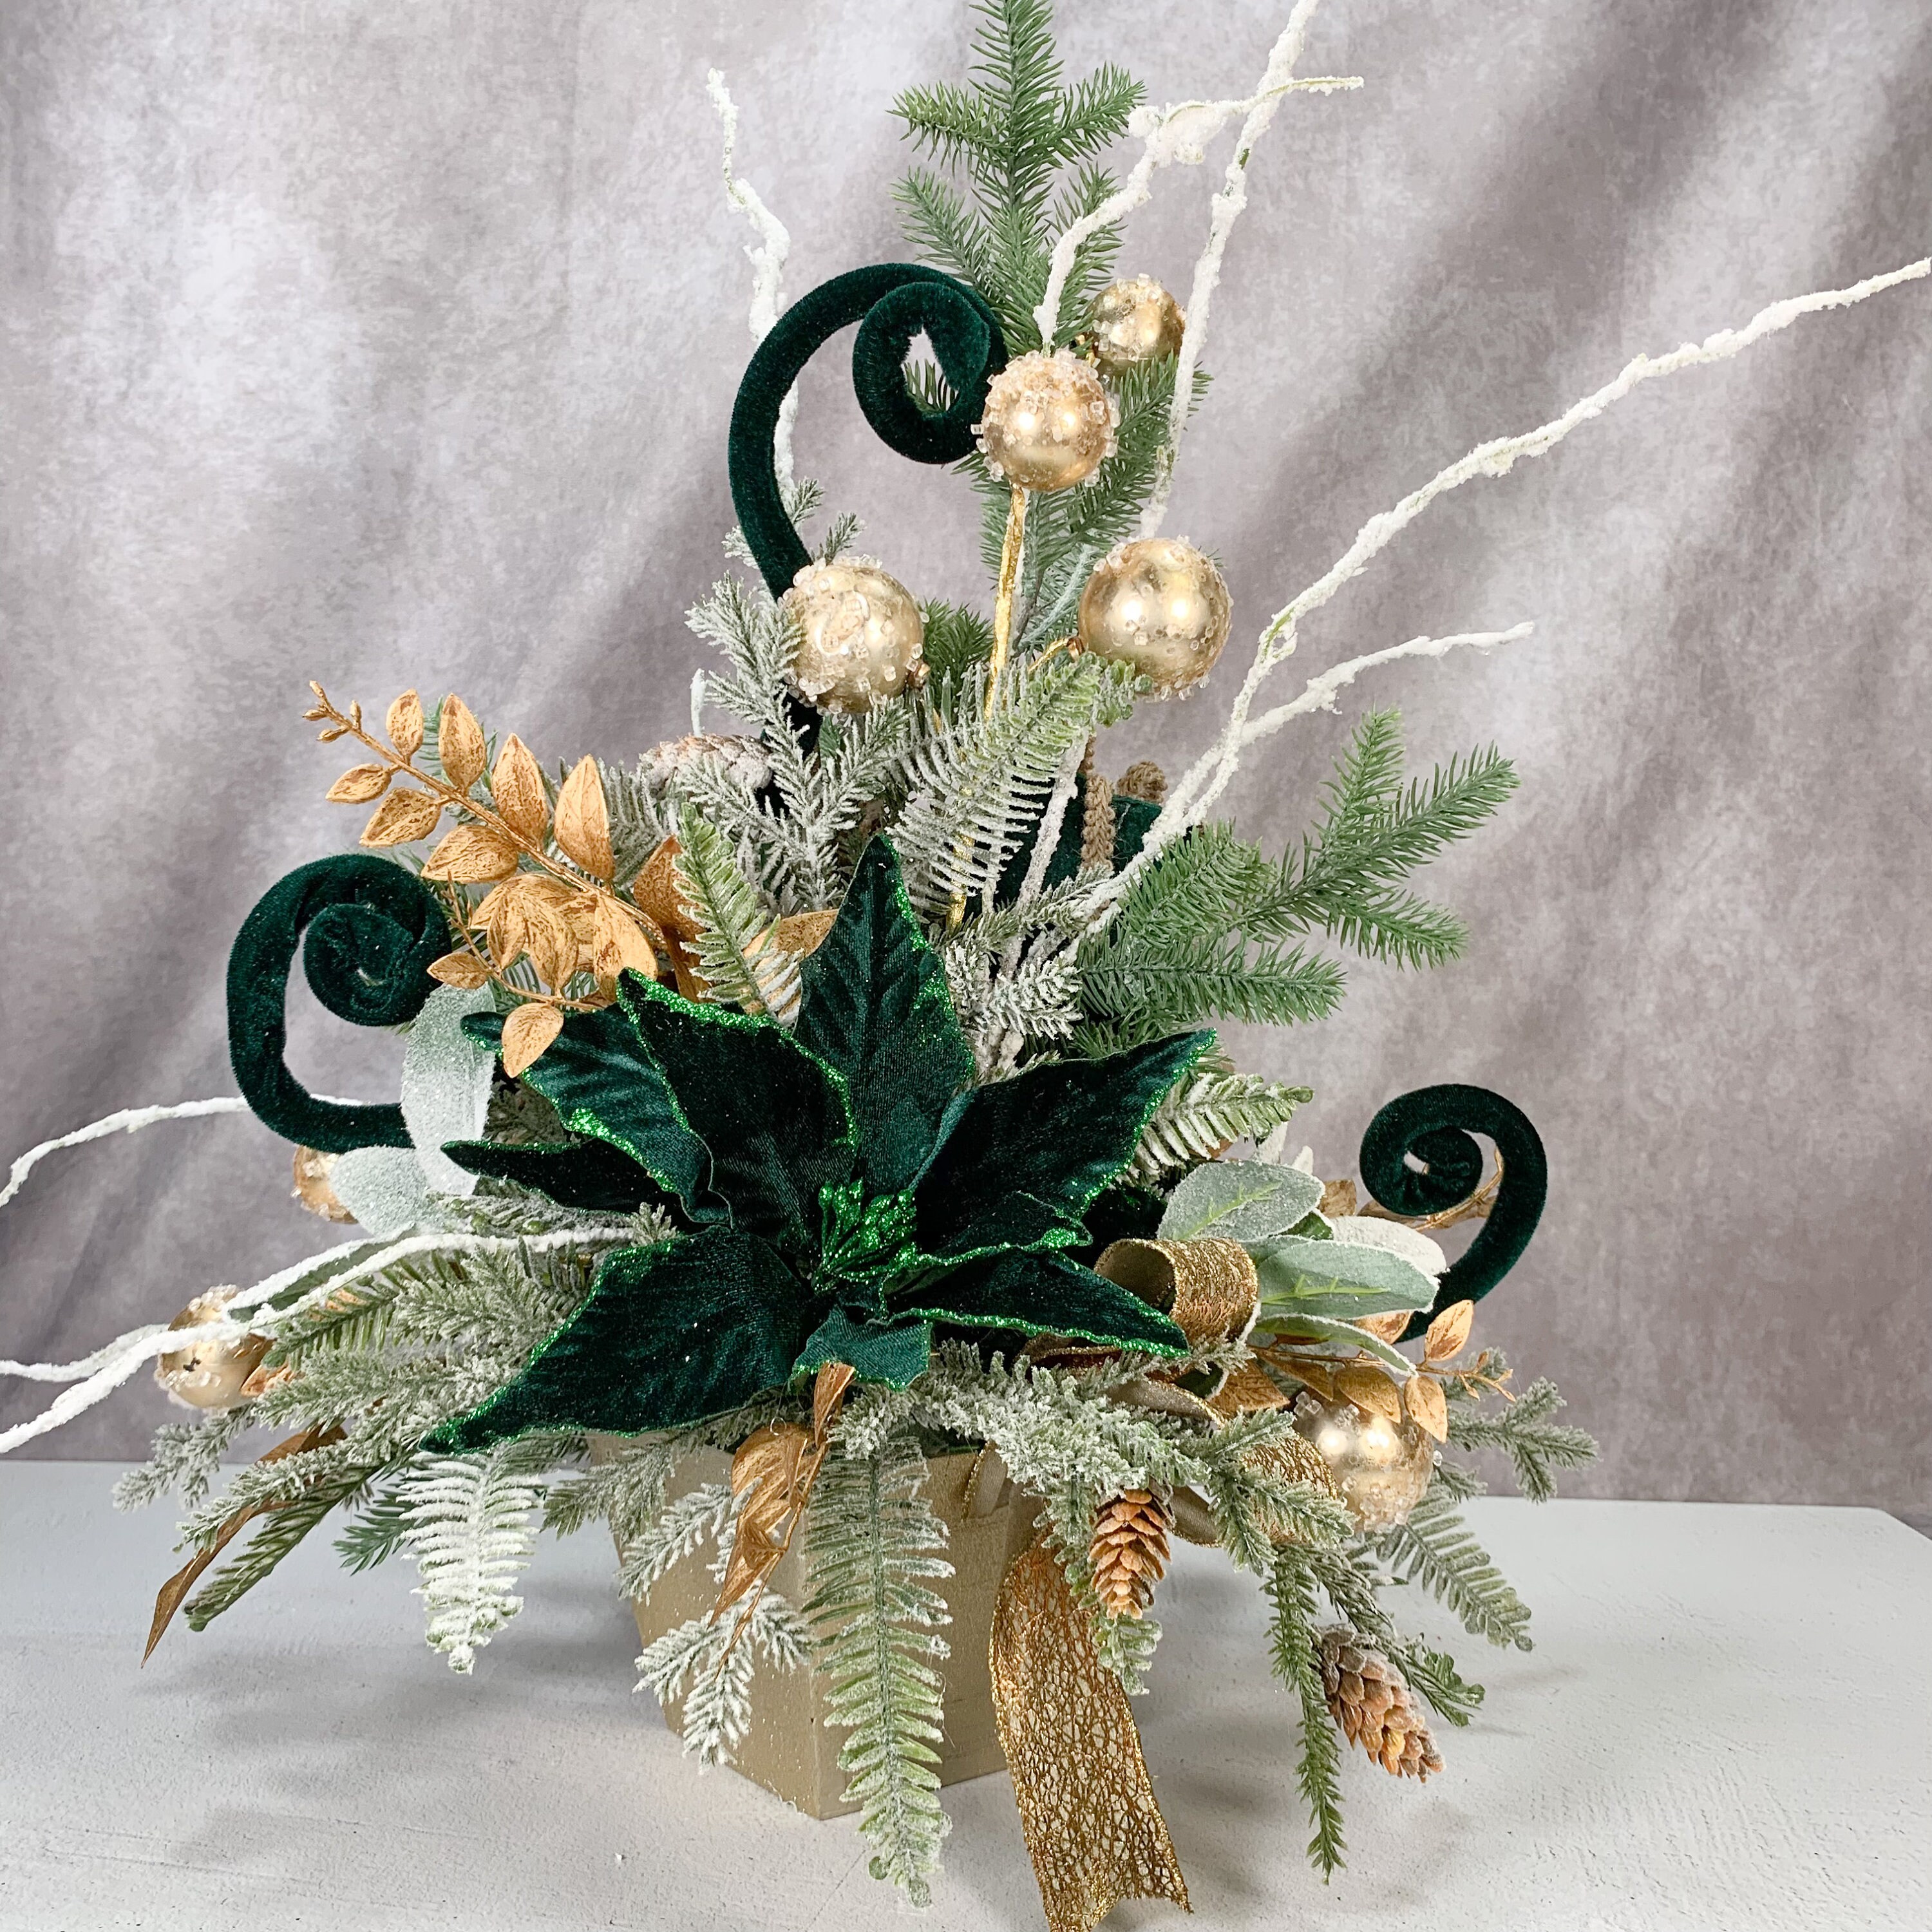 The Holiday Aisle 5 Stems Artificial Poinsettia Floral Arrangement